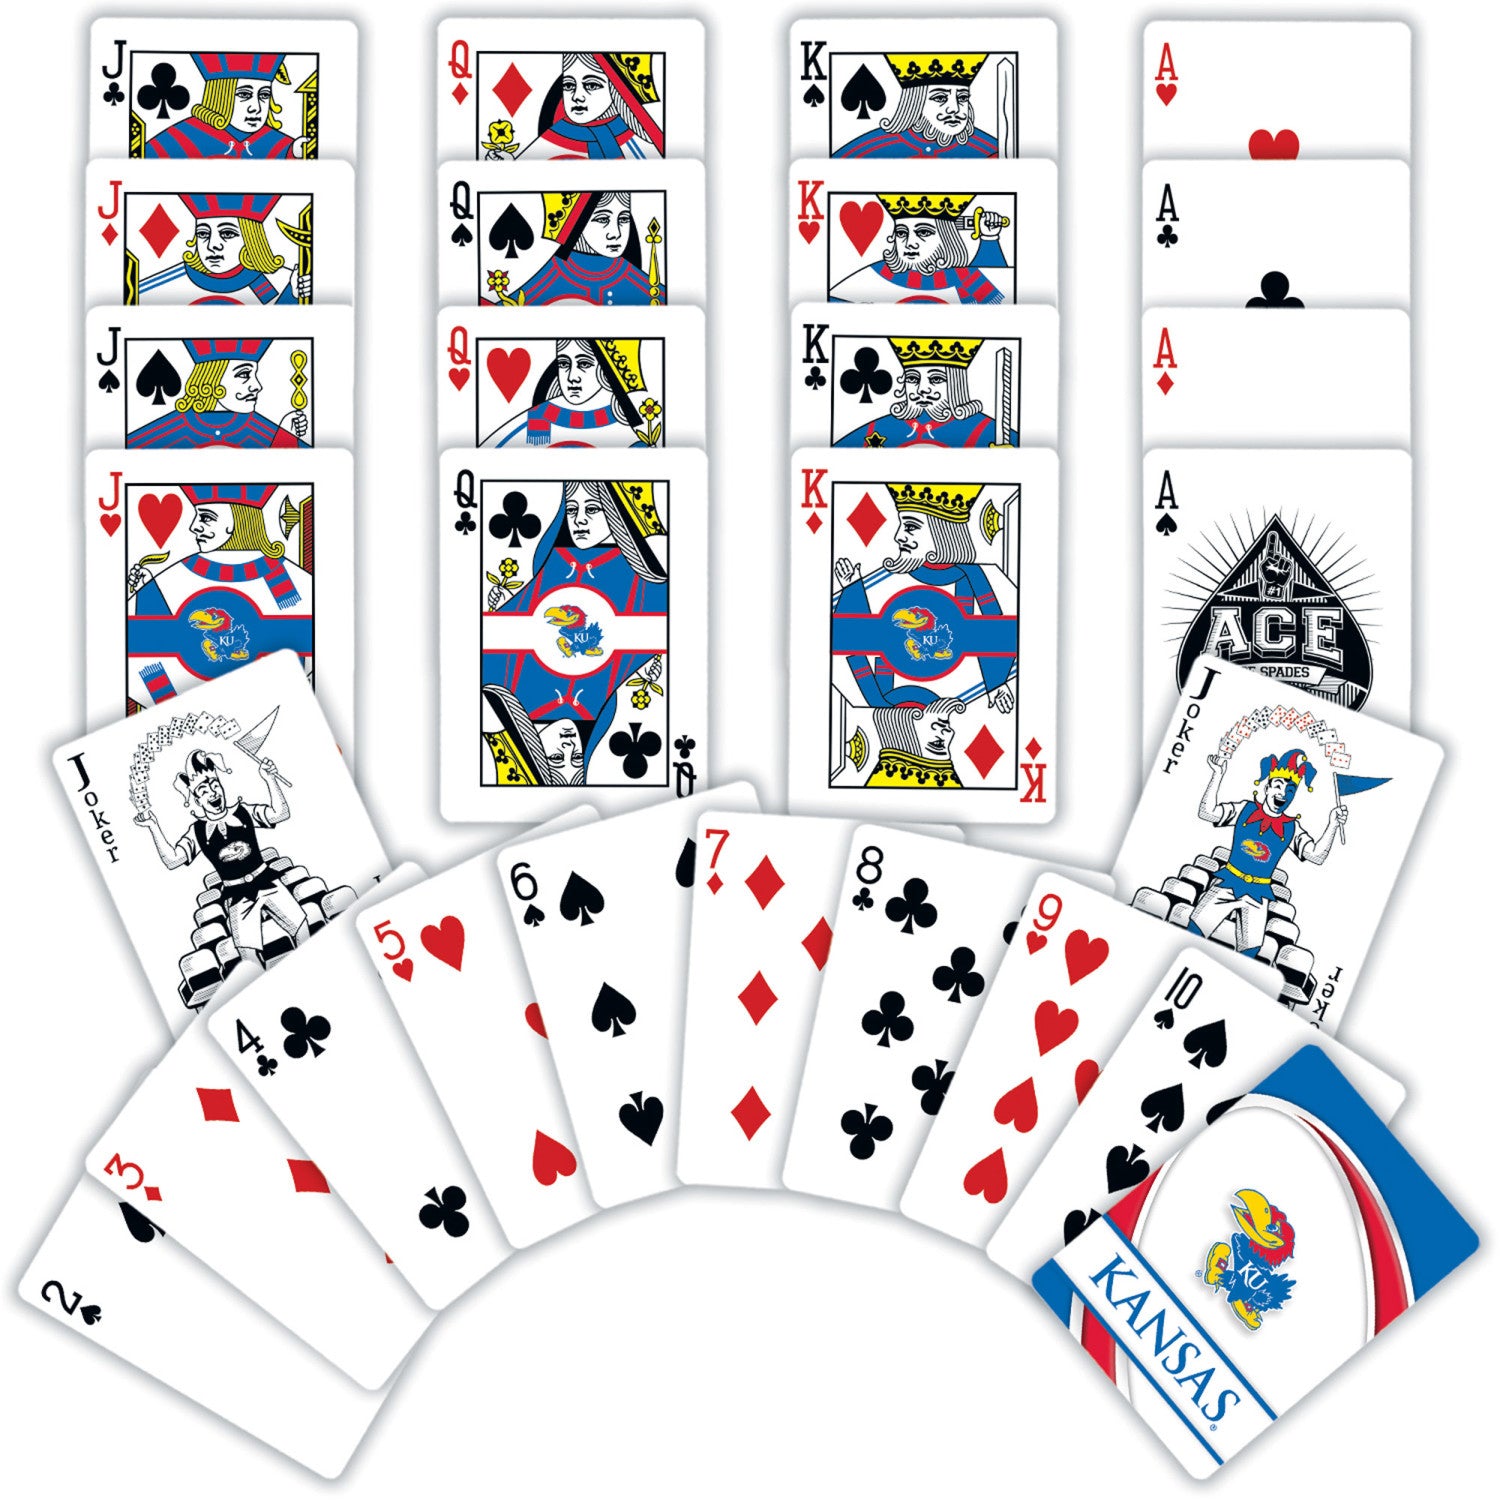 Kansas Jayhawks Playing Cards